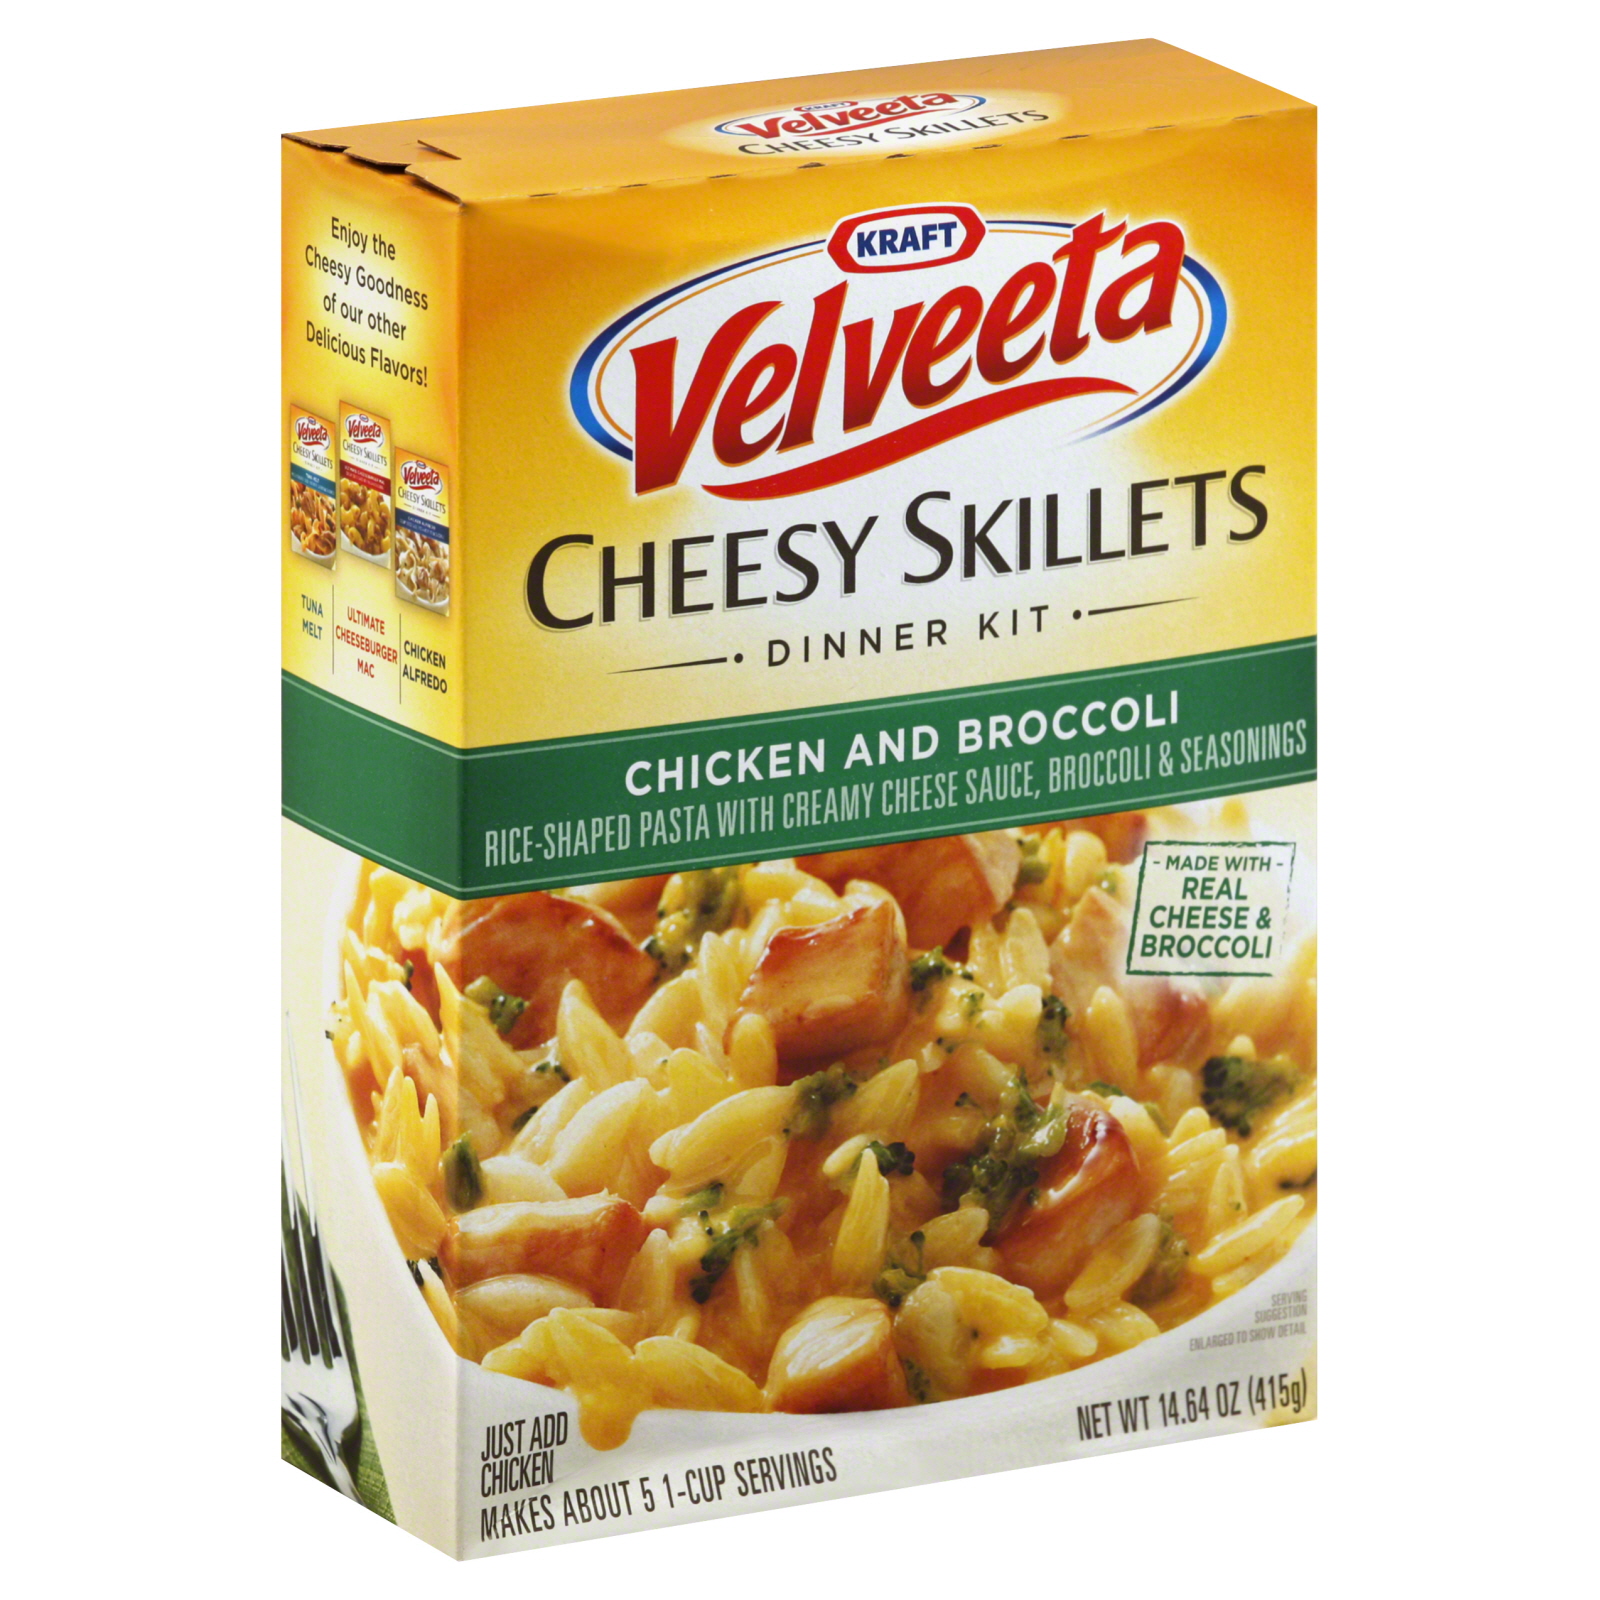 Velveeta Cheesy Skillets Dinner Kit, Chicken and Broccoli, 14.64 oz (415 g)...